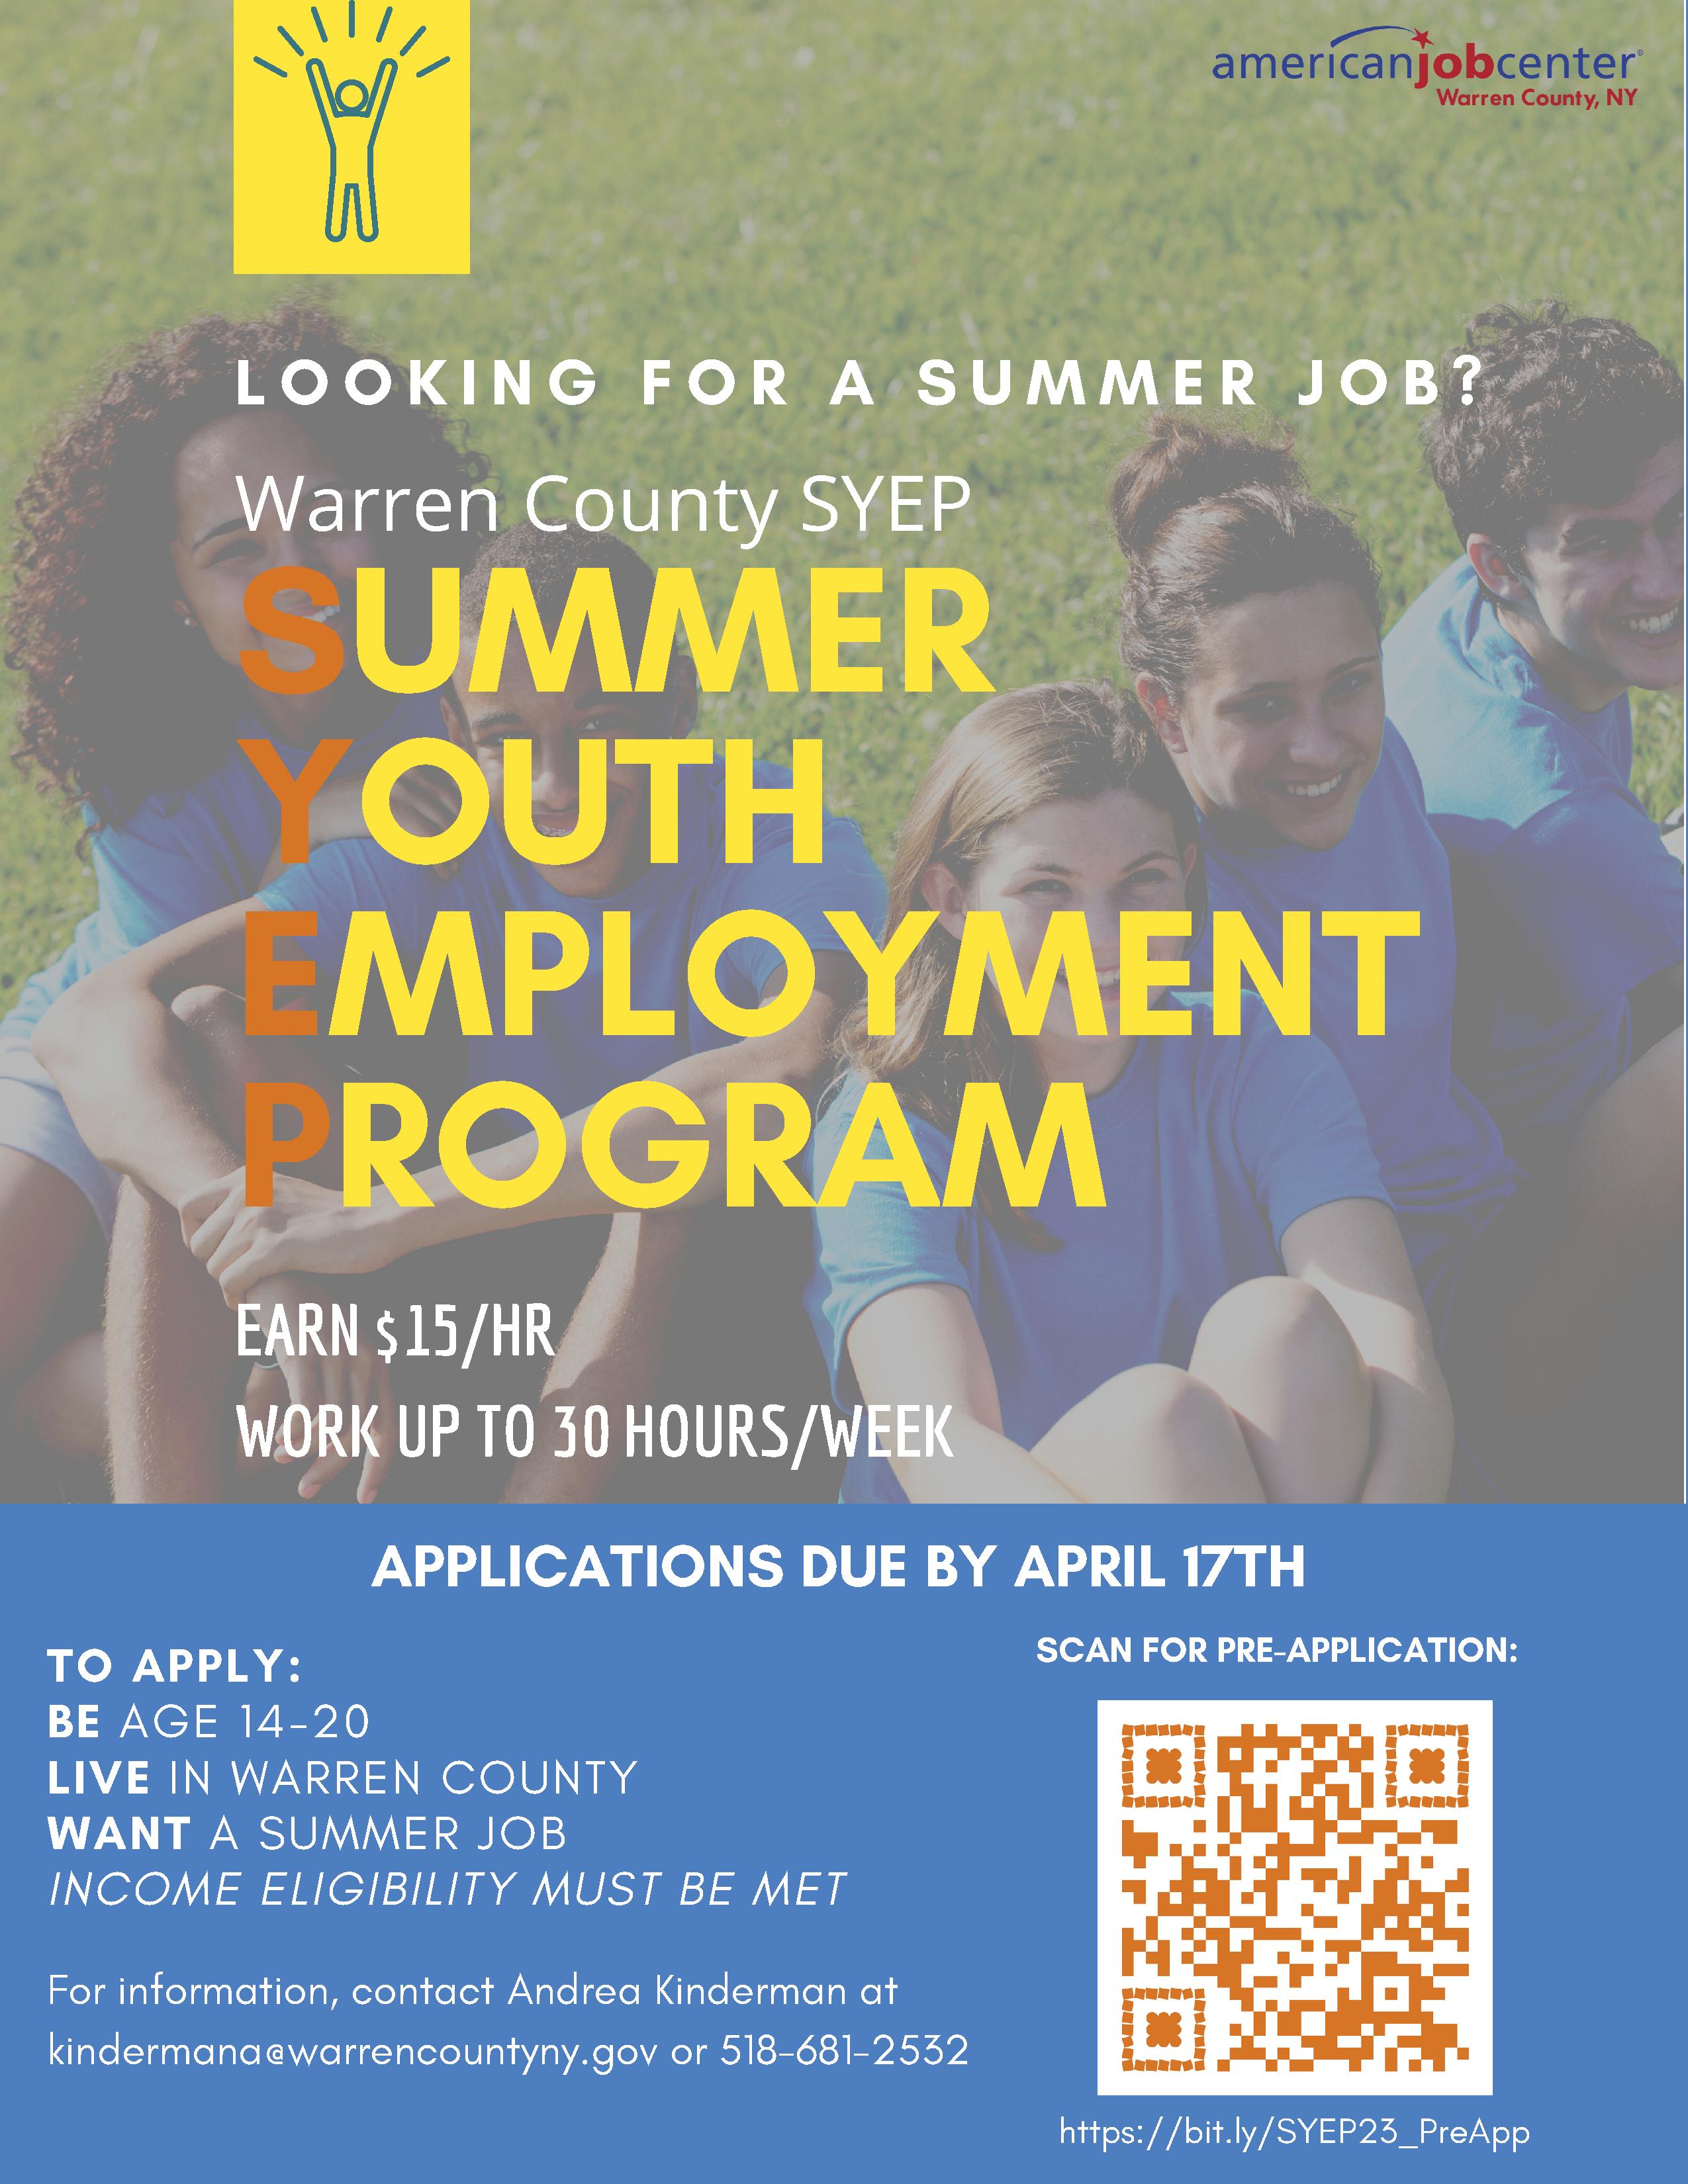 Application period open for Summer Youth Employment Program Warren County